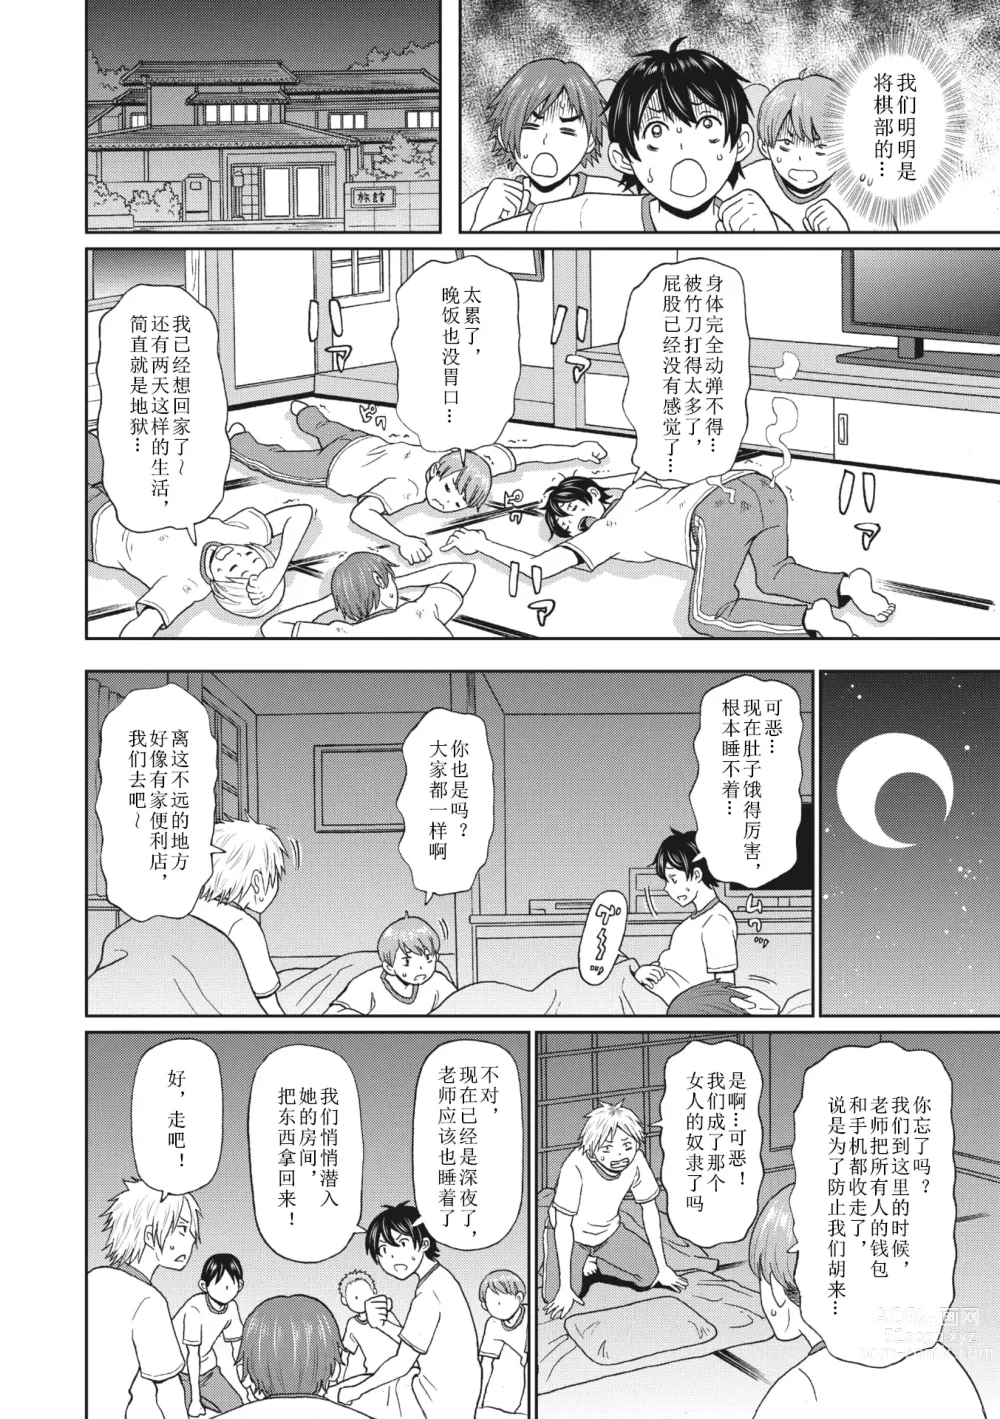 Page 2 of manga Yoidore Spartan